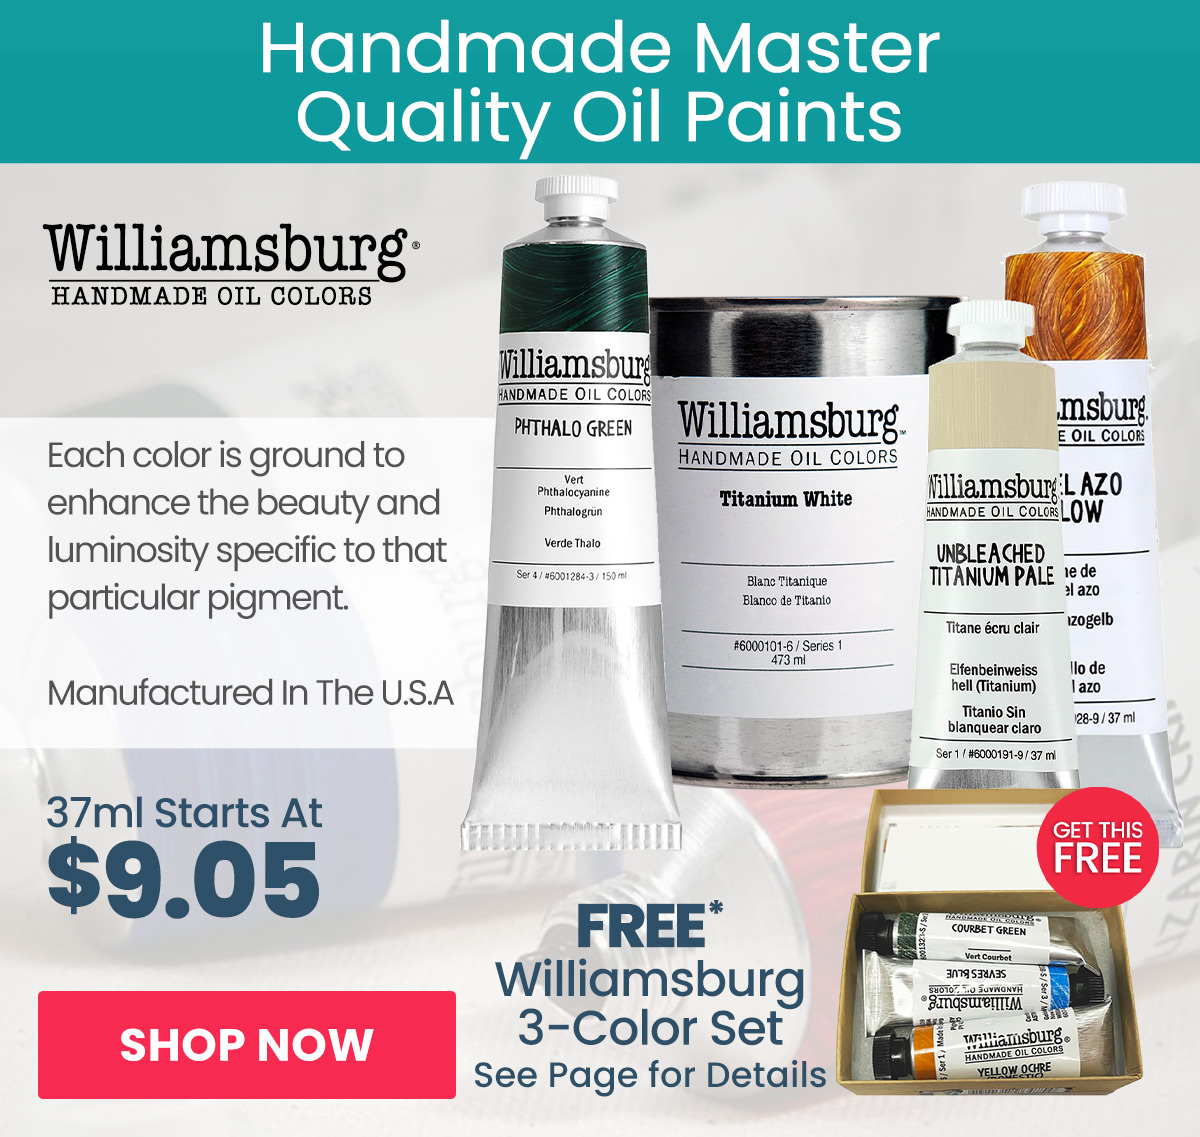 Williamsburg Handmade Oil Paints - Free 3 color Set